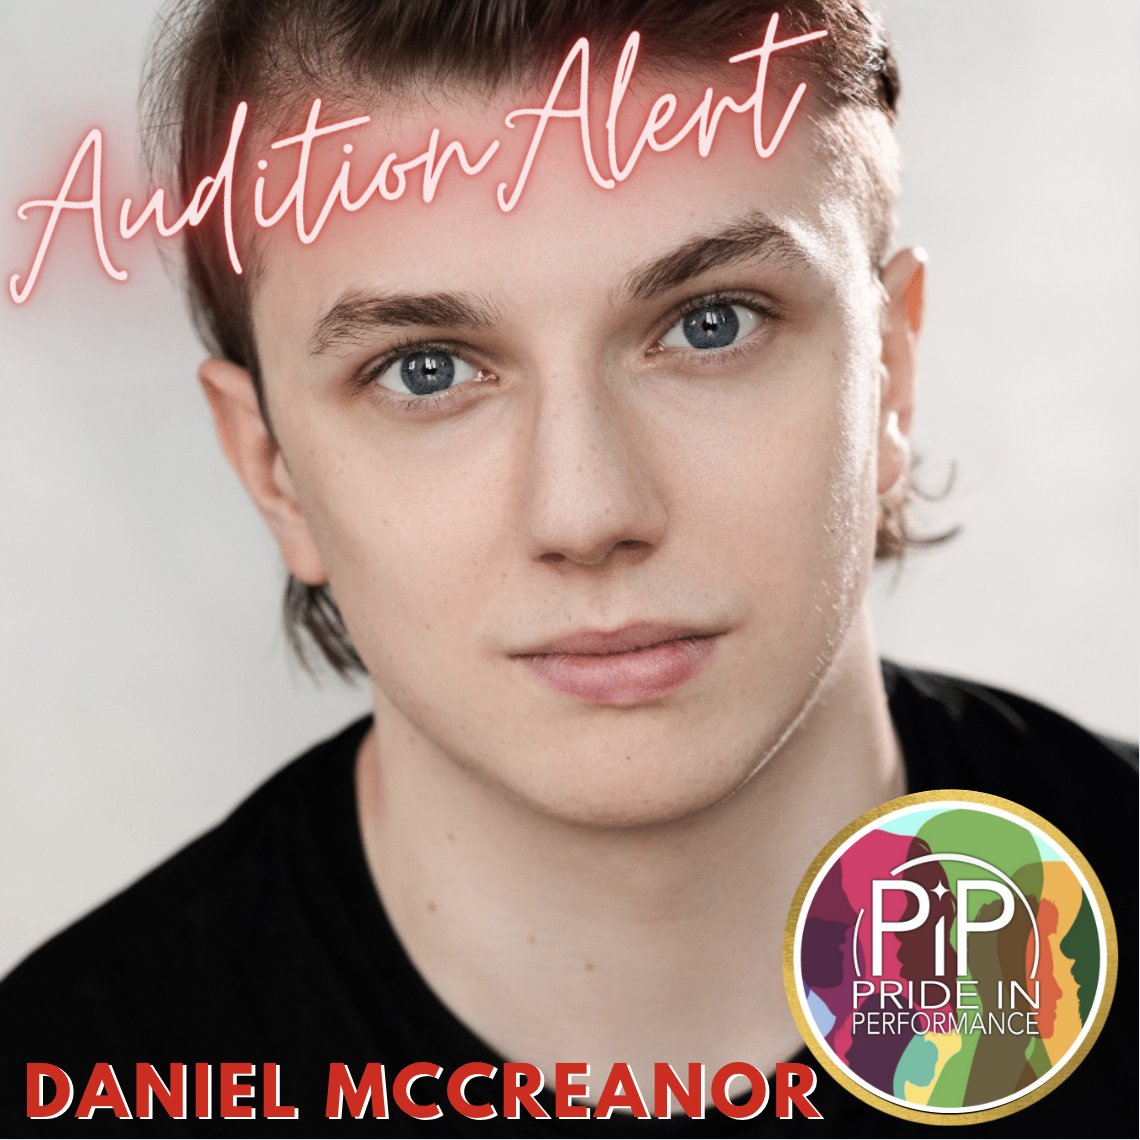 🚨 Audition Alert For DANIEL McCREANOR 🚨
@McCreanor_ enjoying a lovely #SelfTape #Casting  for an AMAZING #Television #Series 
spotlight.com/5493-5614-6350 
#PositivelyPiP 
#AuditionAlert 
#ActorsLife